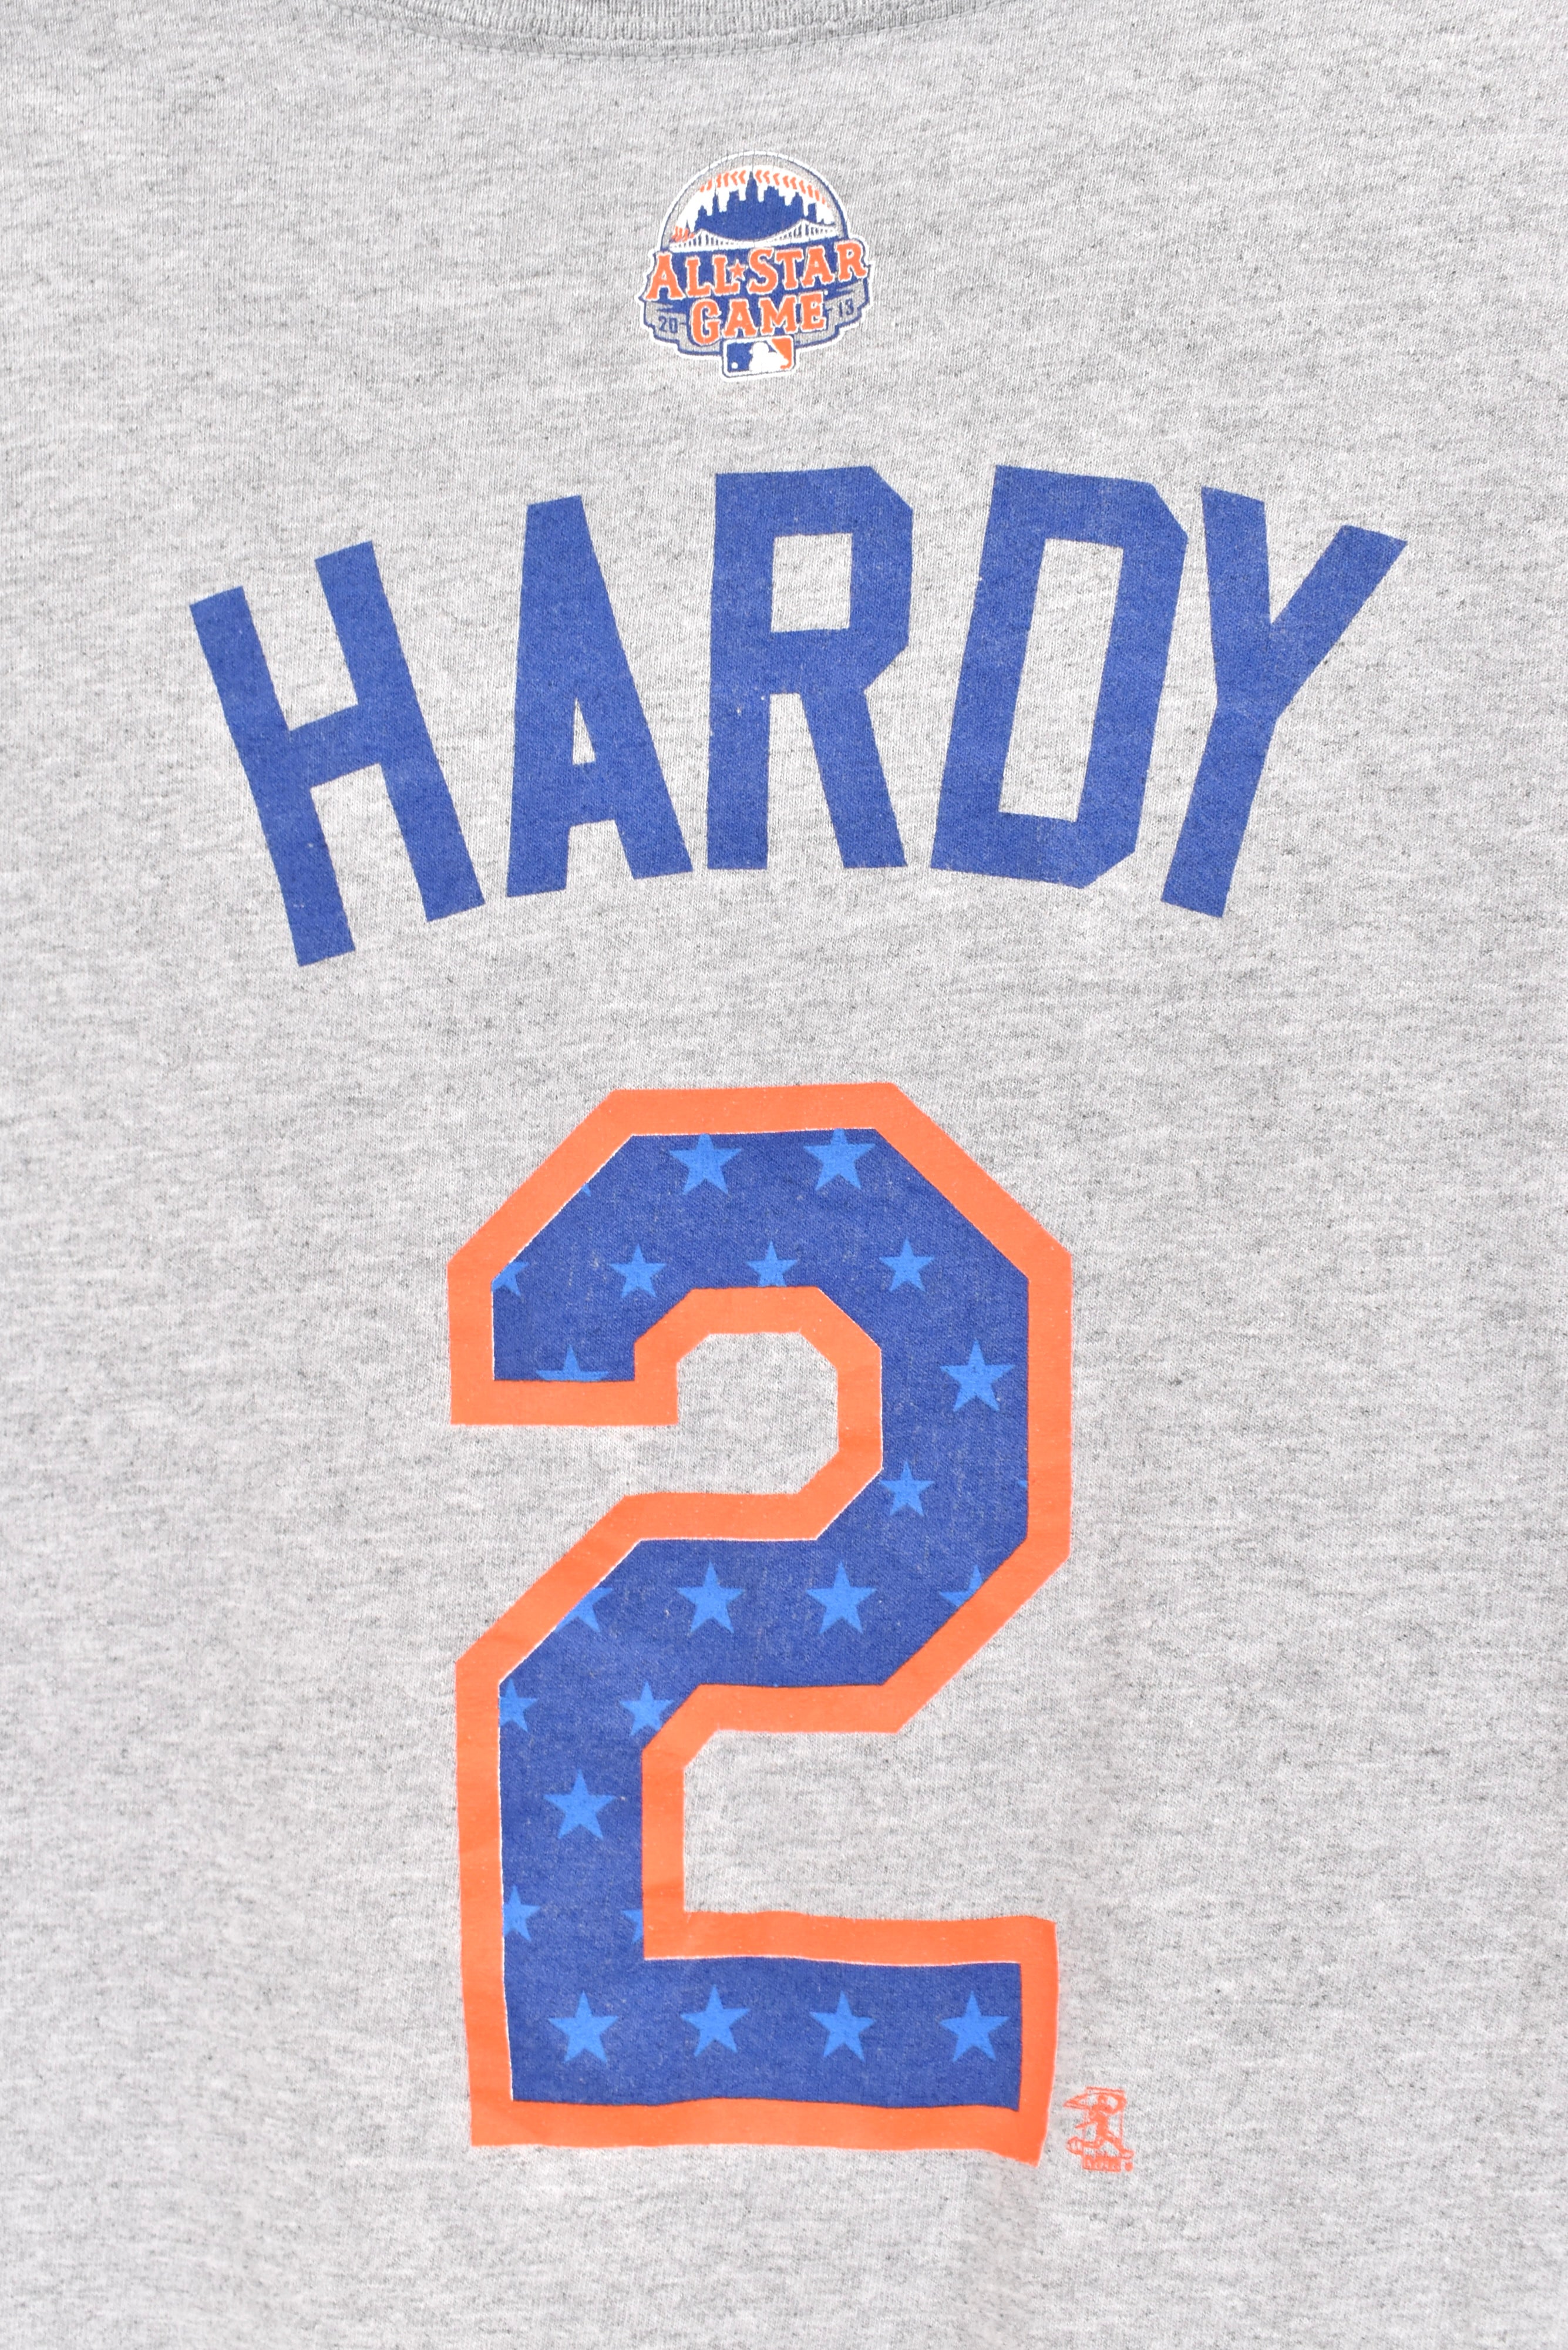 Vintage MLB shirt, J. J. Hardy grey graphic tee - AU XL PRO SPORT